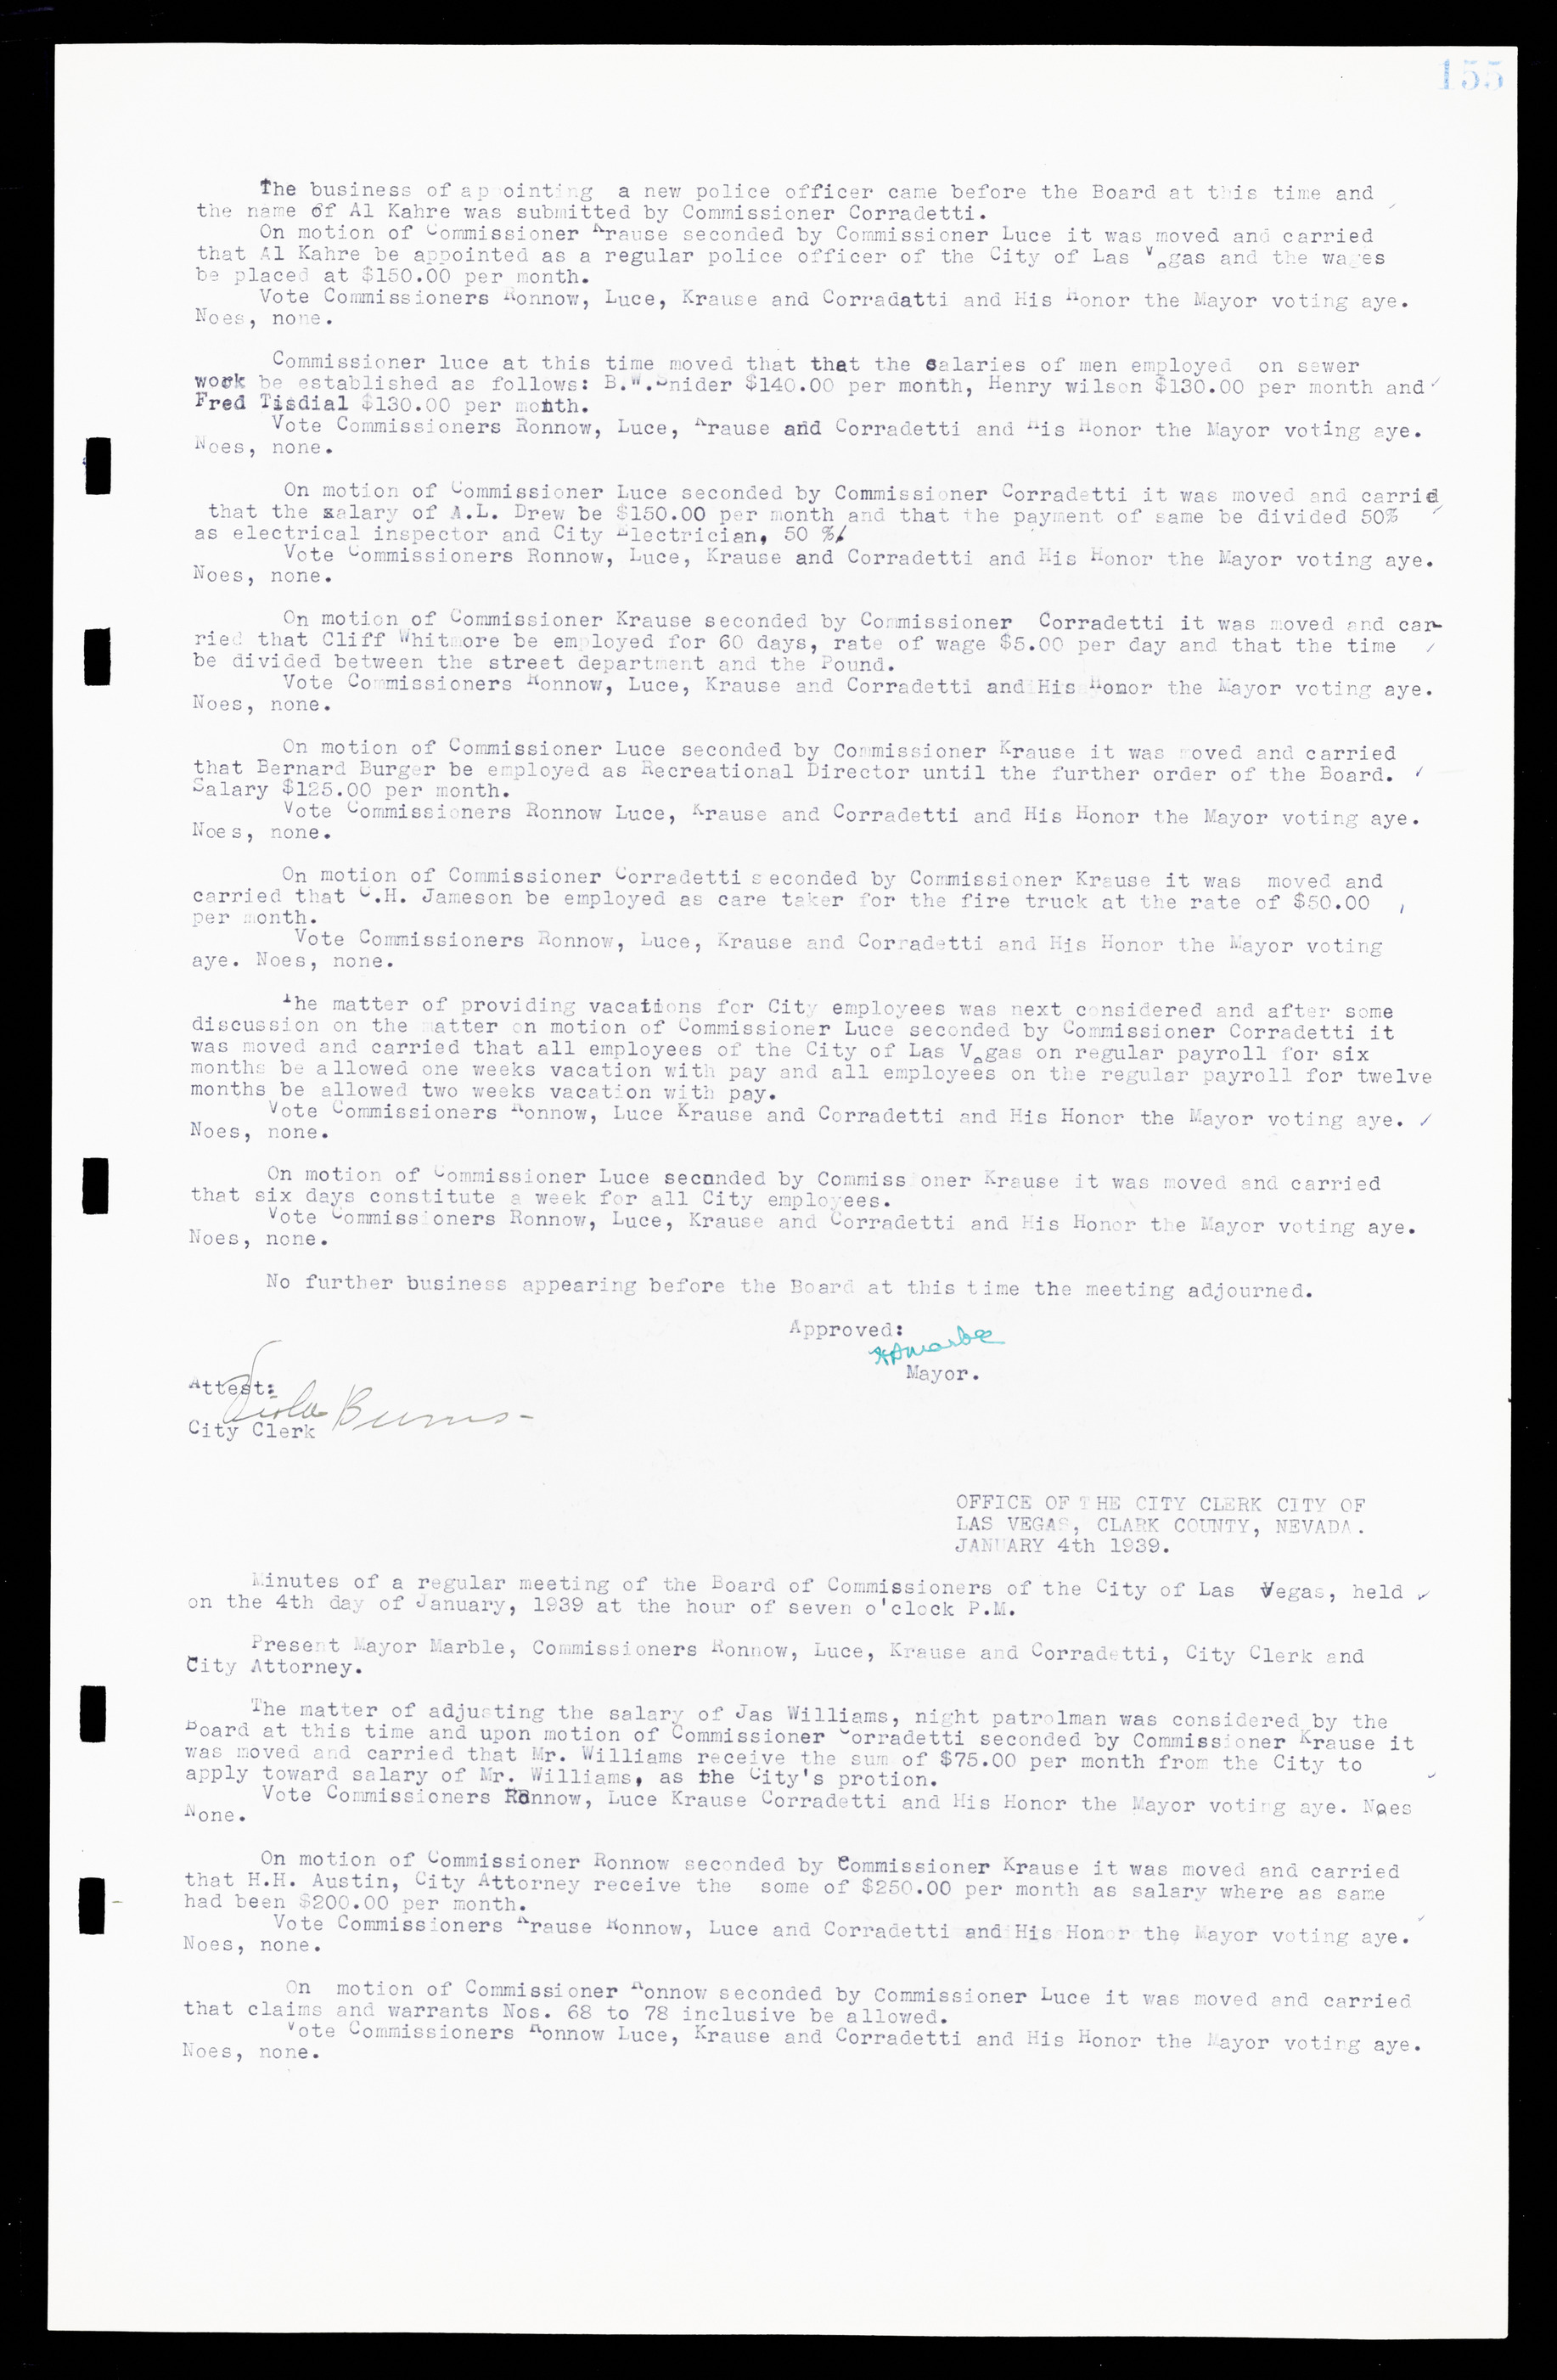 Las Vegas City Commission Minutes, February 17, 1937 to August 4, 1942, lvc000004-170